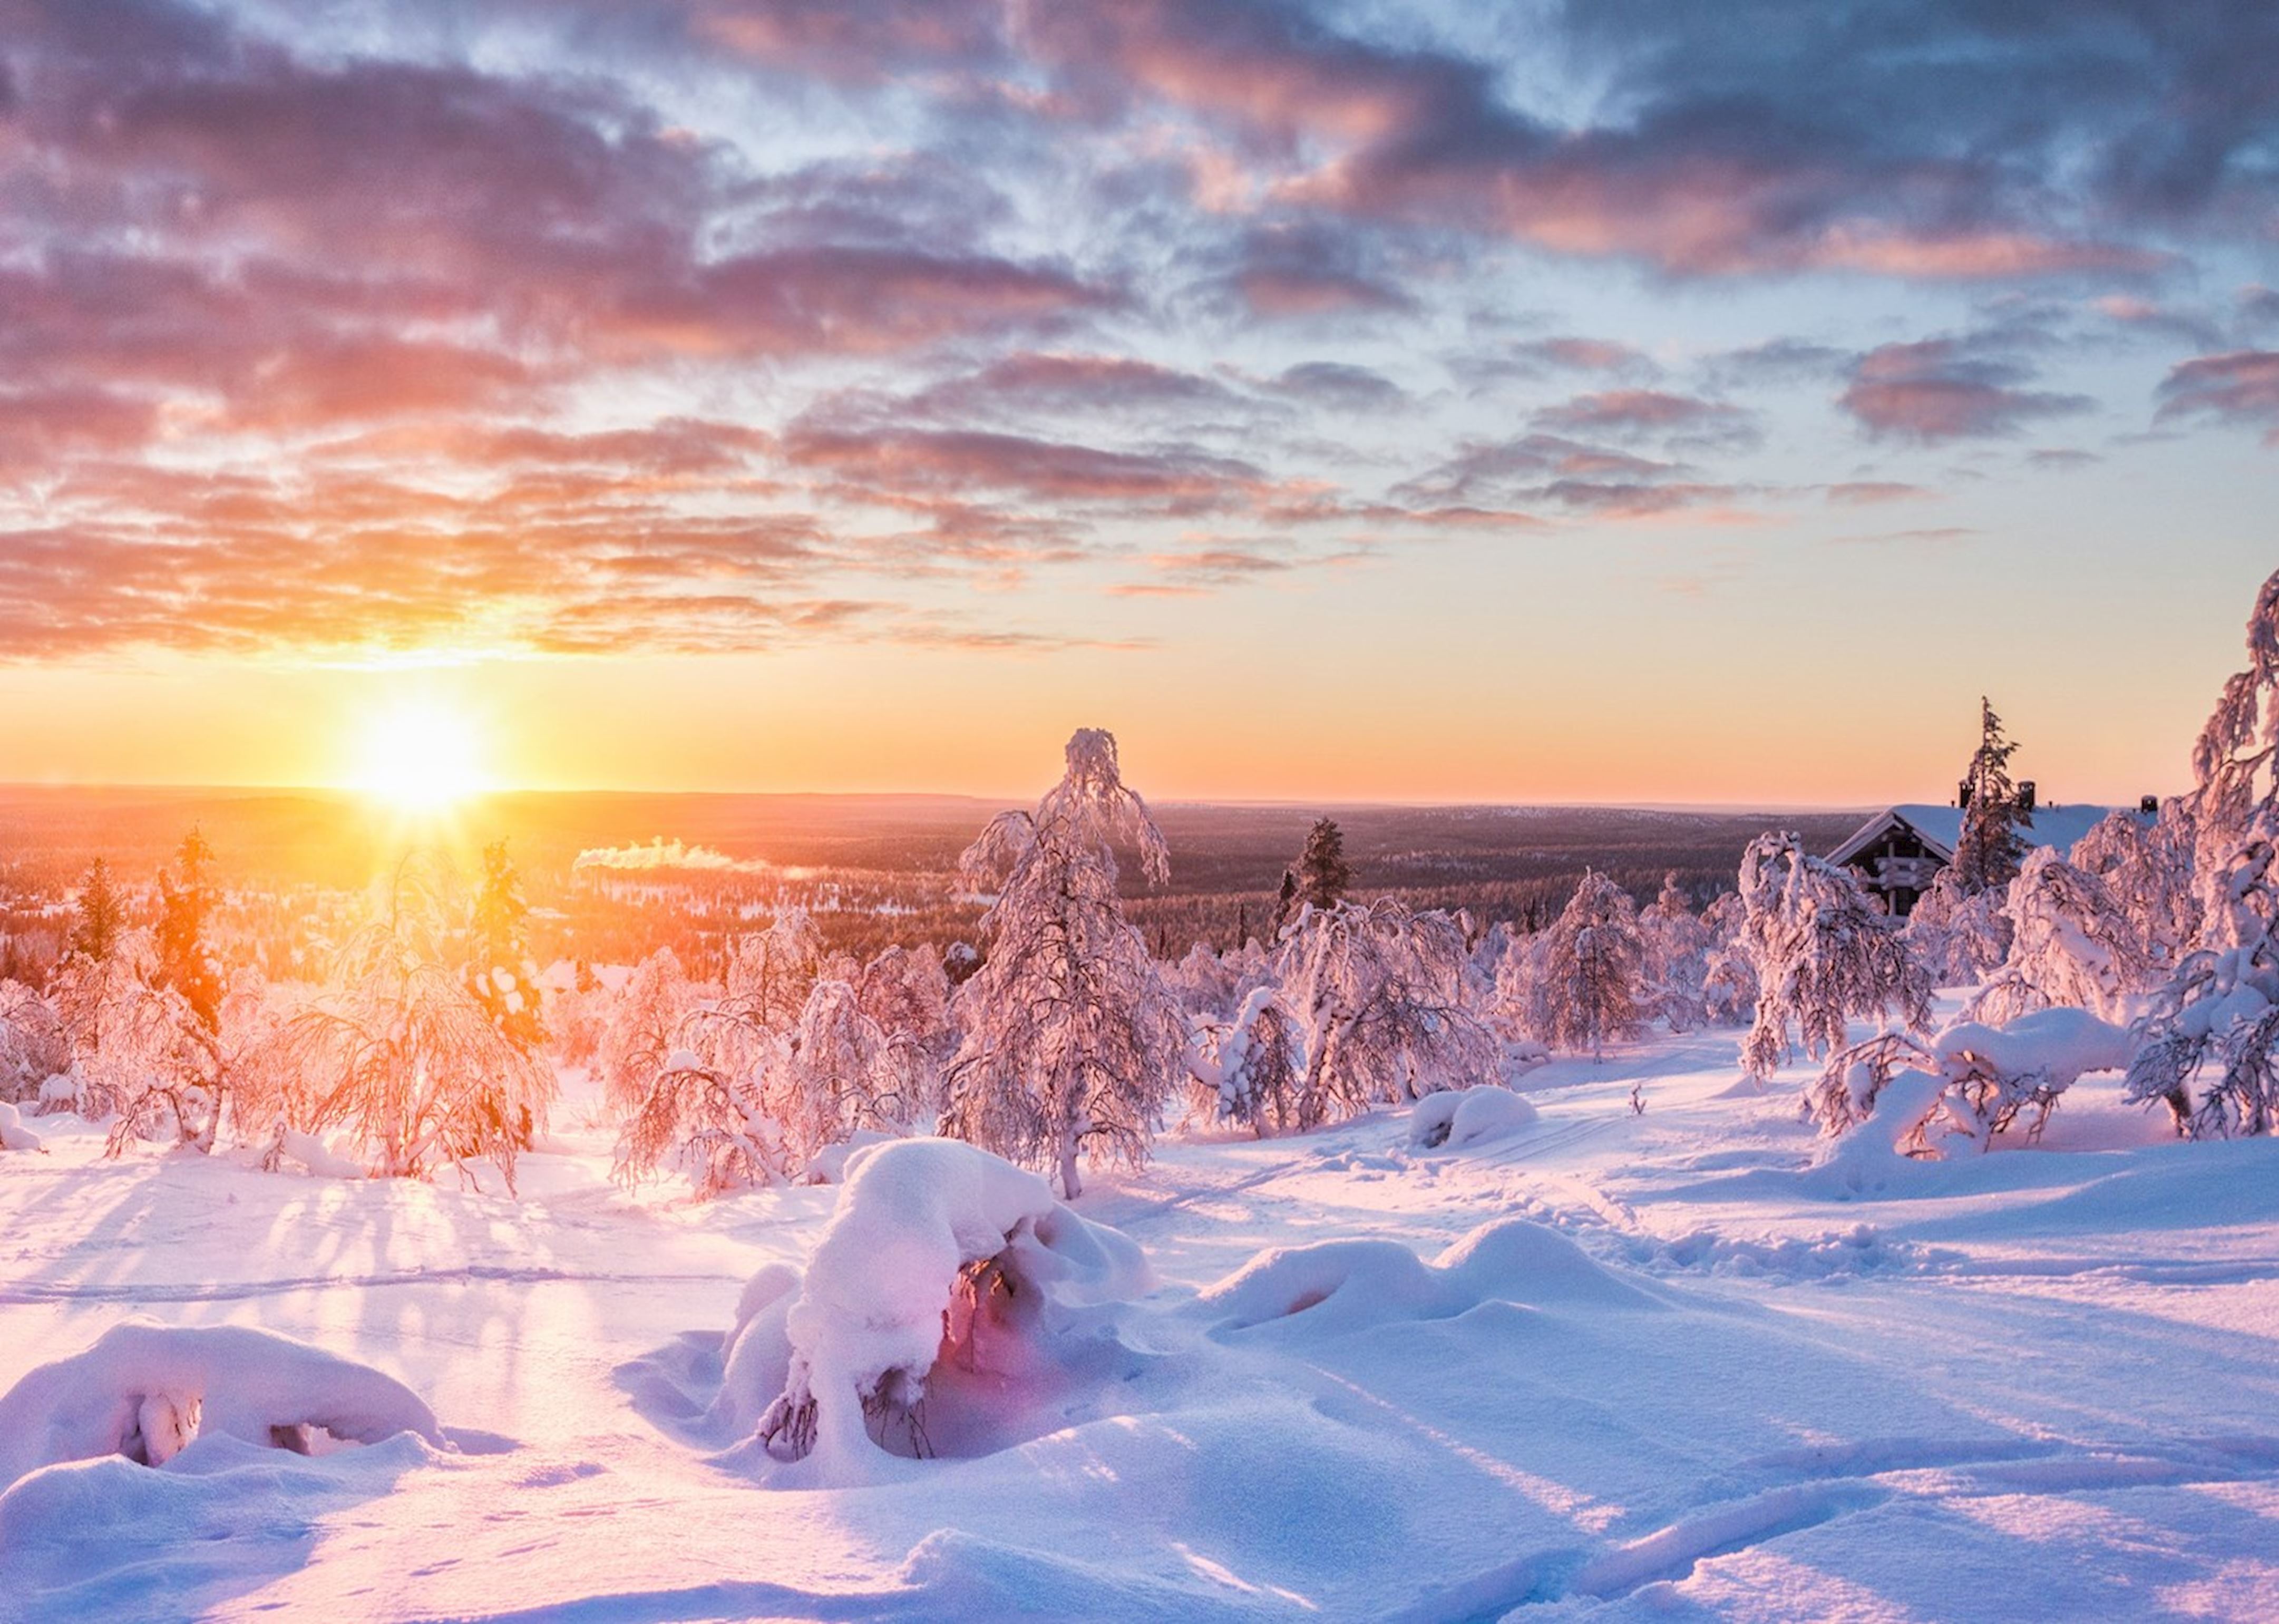 Swedish winter wonderland | Audley Travel